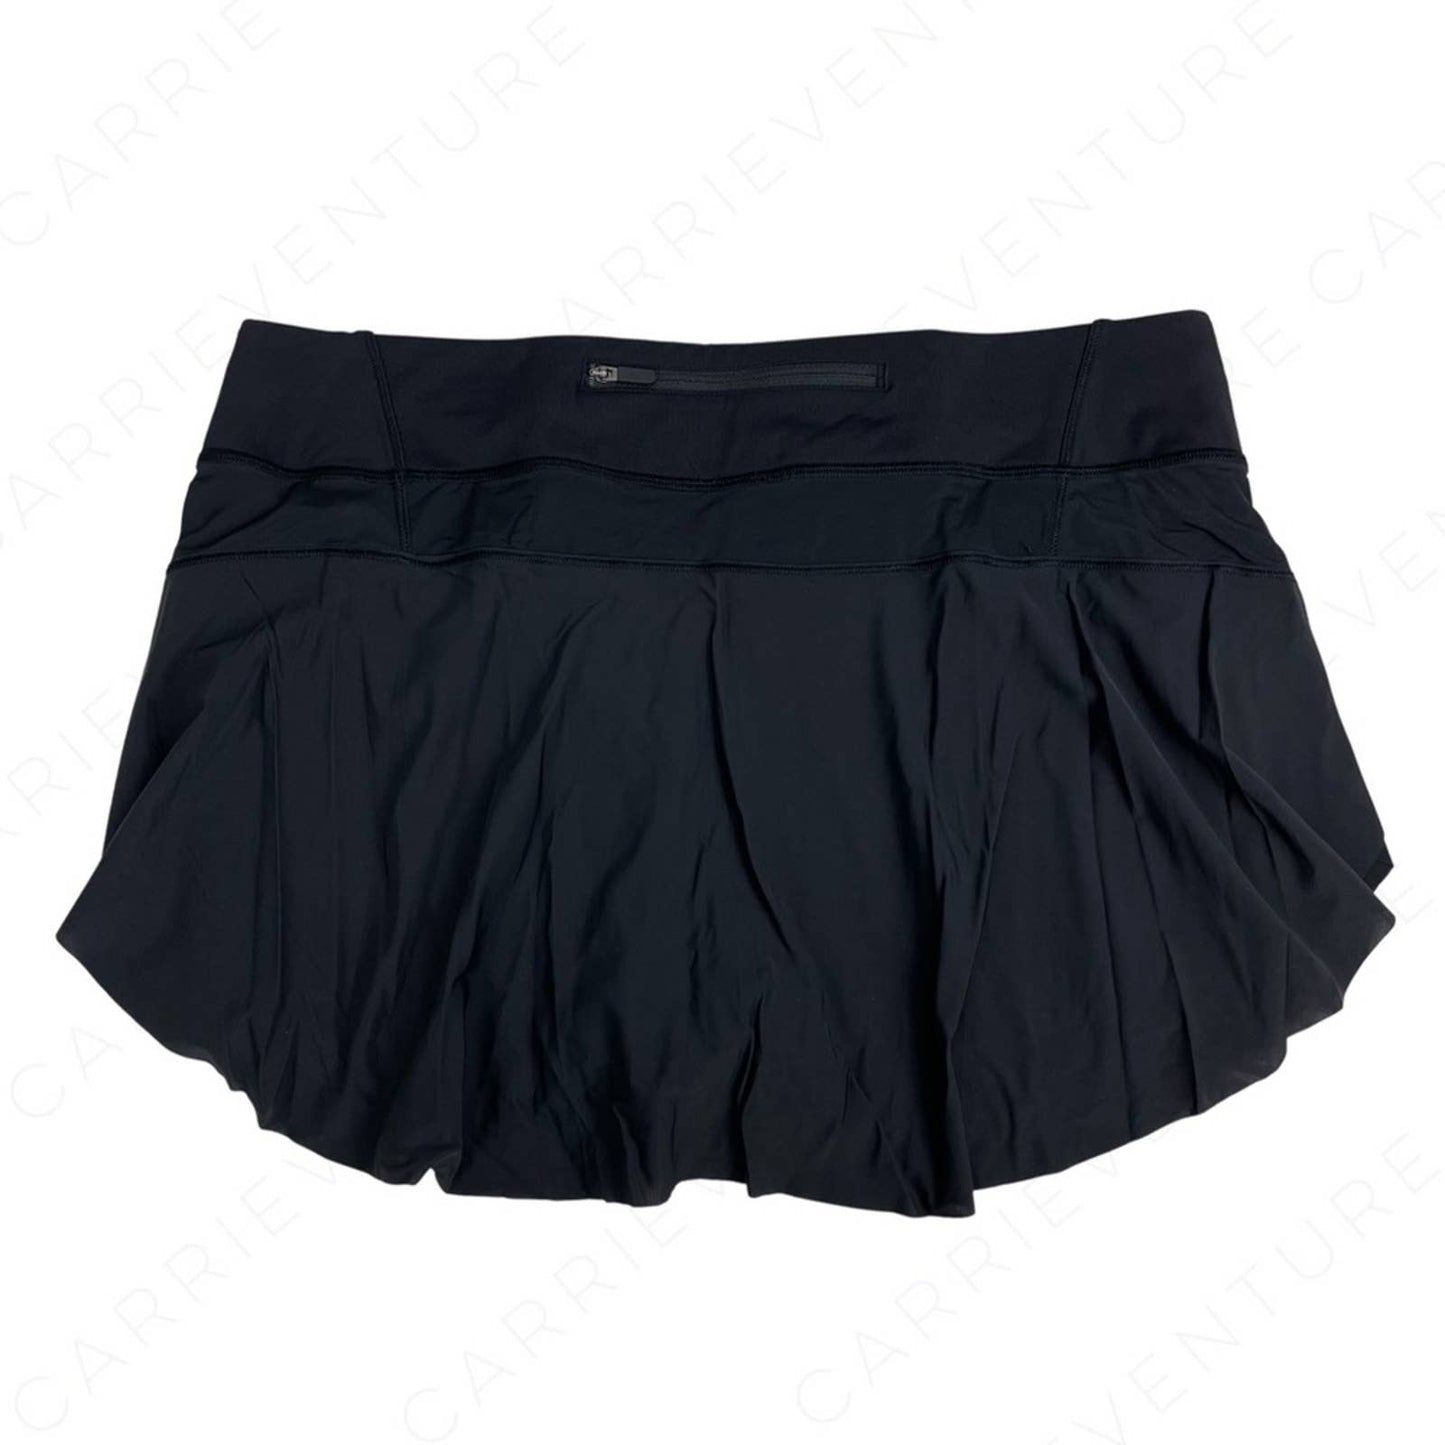 NEW Lululemon Quick Pace Black Lightweight Running Athletic Active Skirt Skort Size 10